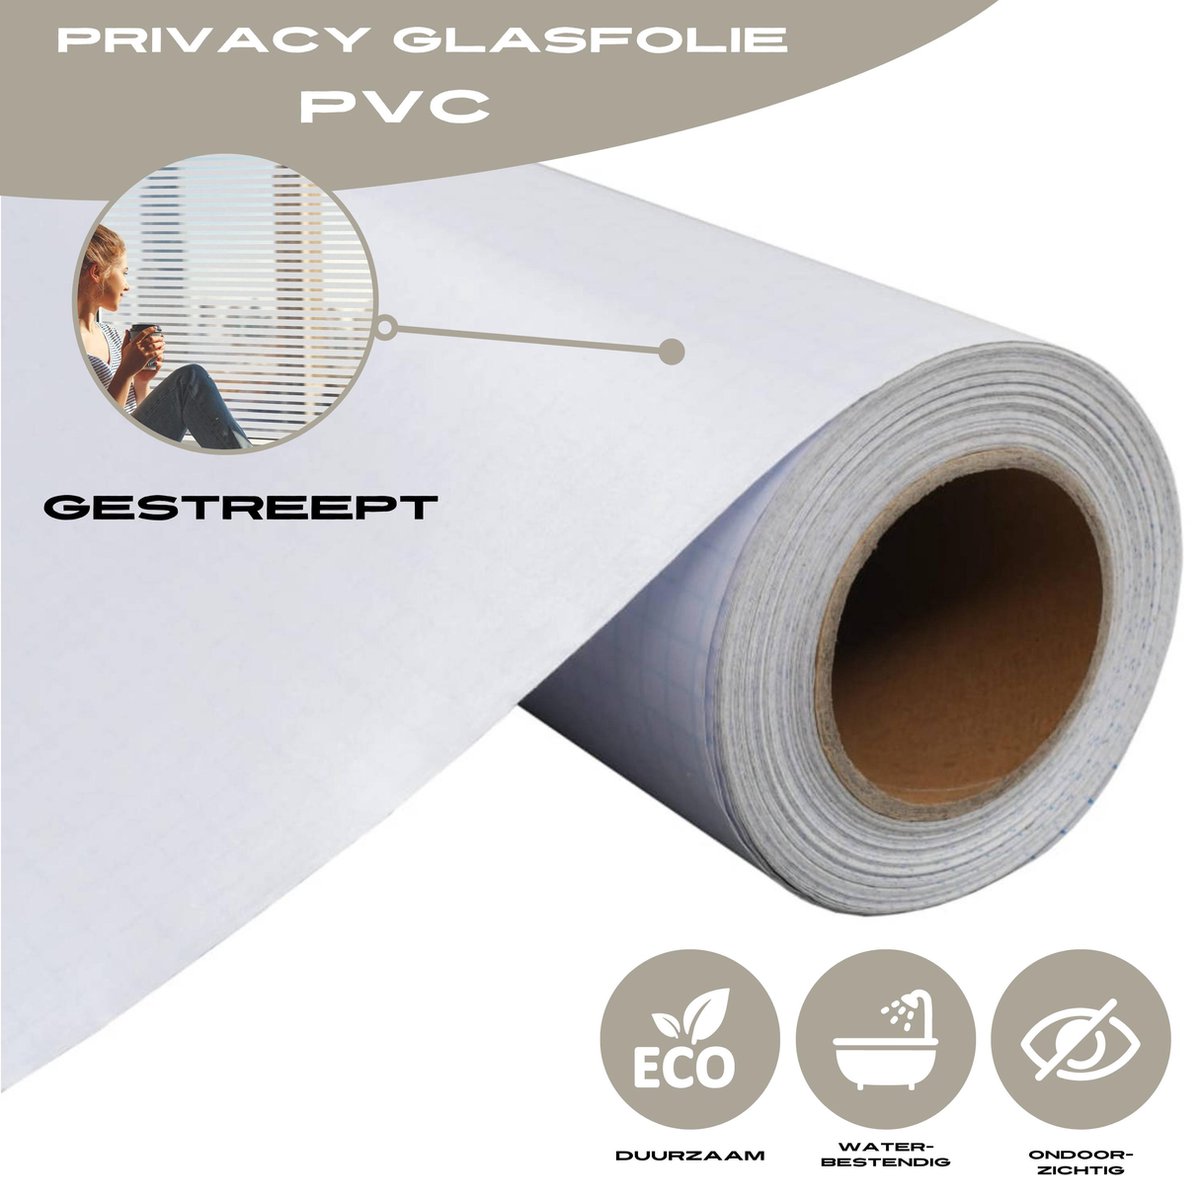 Privacyfolie - UV werend - werkt isolerend - zelfklevend - mat - strepen - gestreept melkglas - duurzaam - isolatie - folie - raamfolie - inkijkwerend - matglas - badkamerfolie - badkamer - huiskamer - keuken - slaapkamer - glasfolie - 0,9 m x 10 m